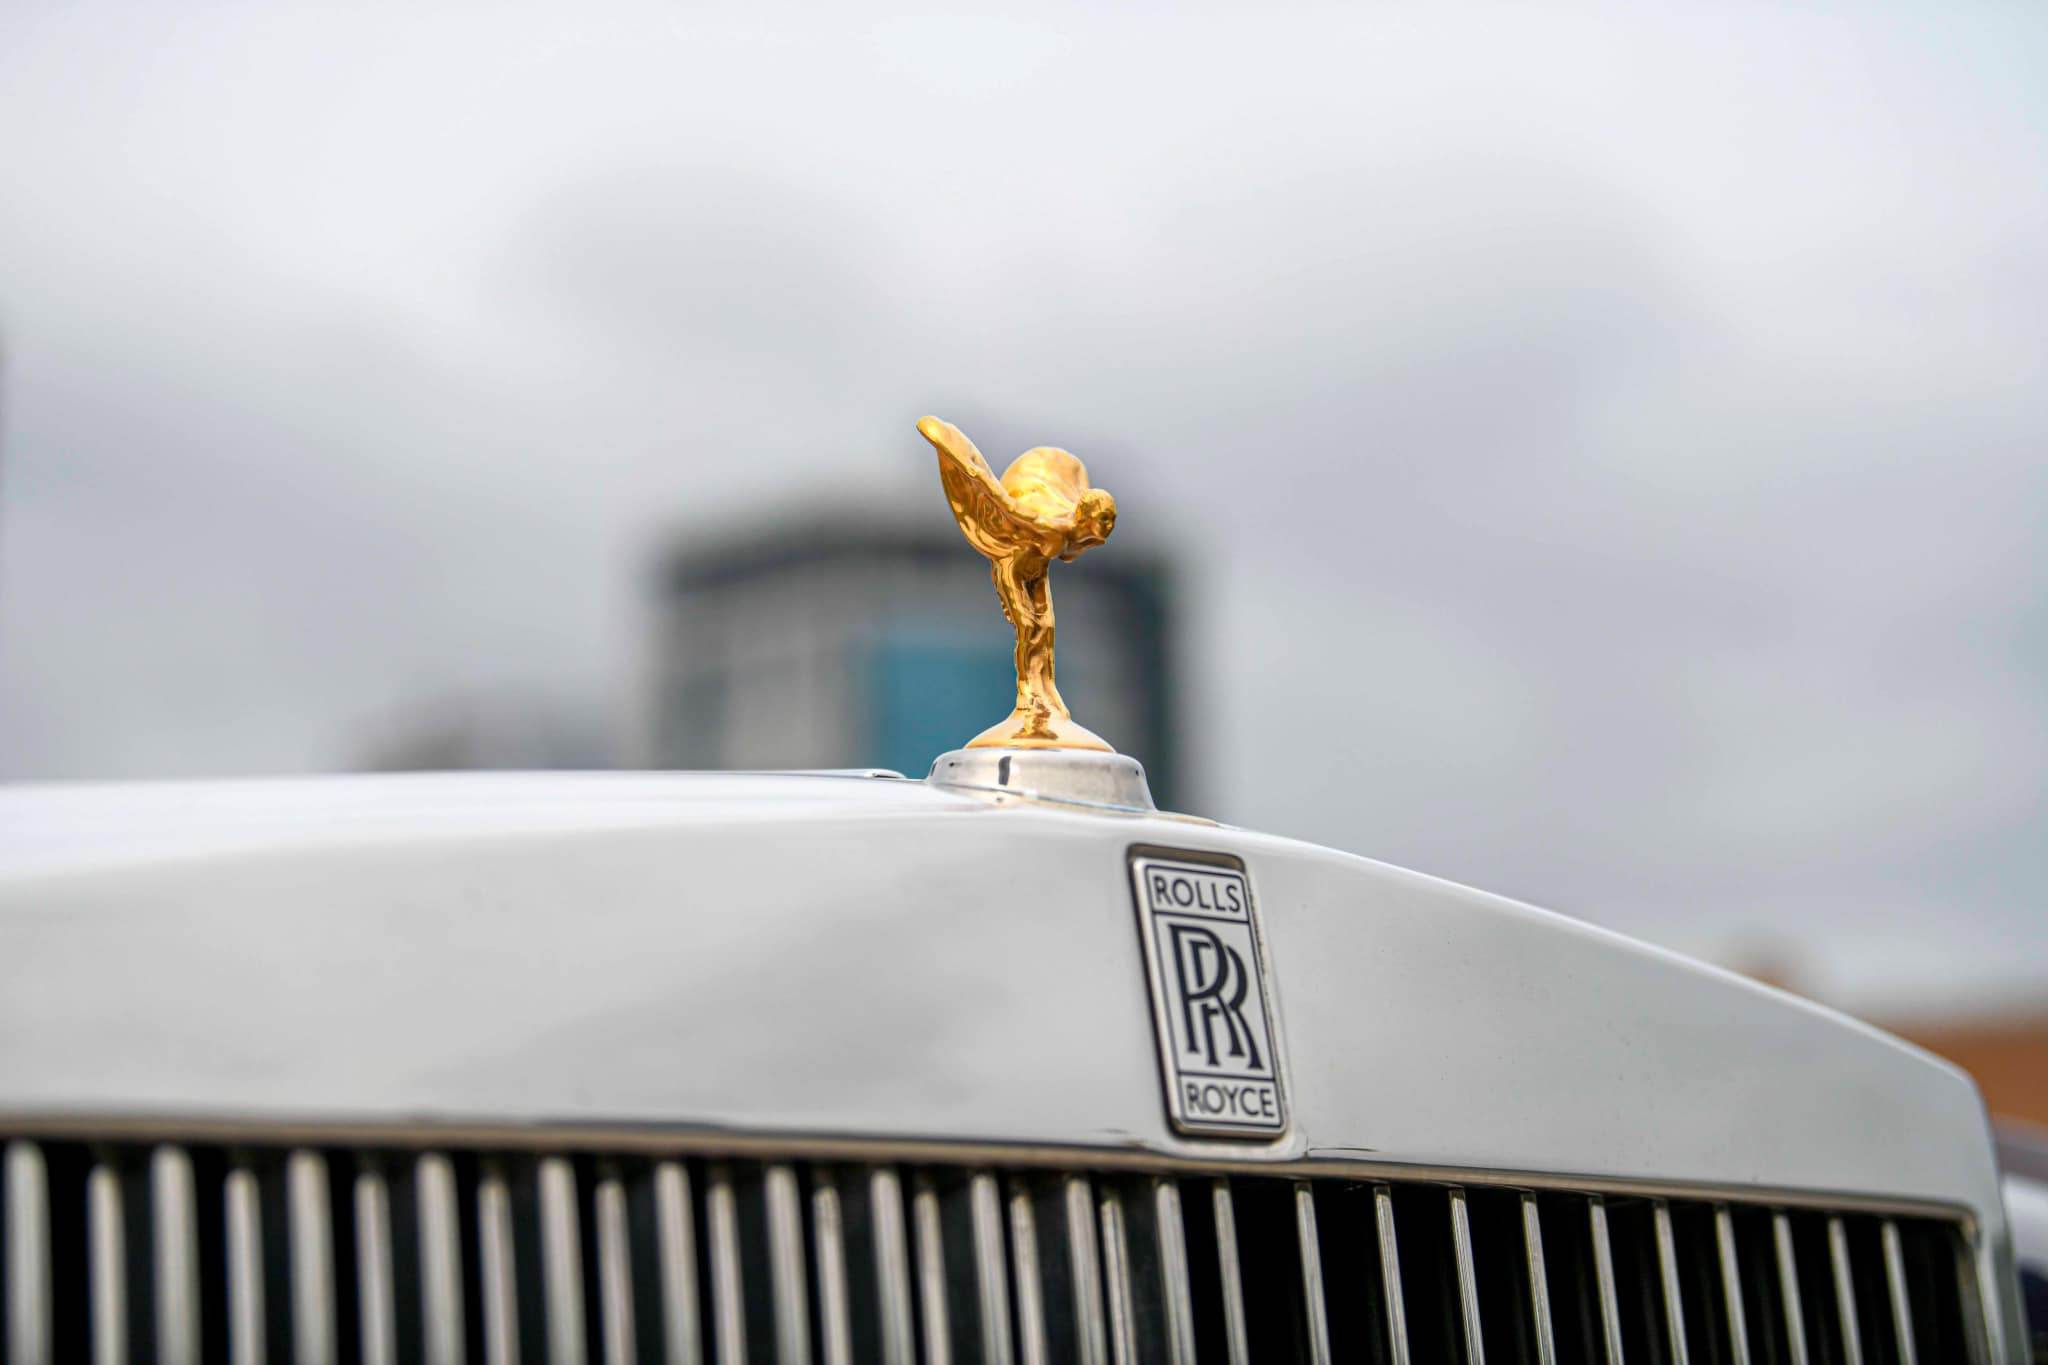 Rolls Royce Phantom Lửa Thiêng full